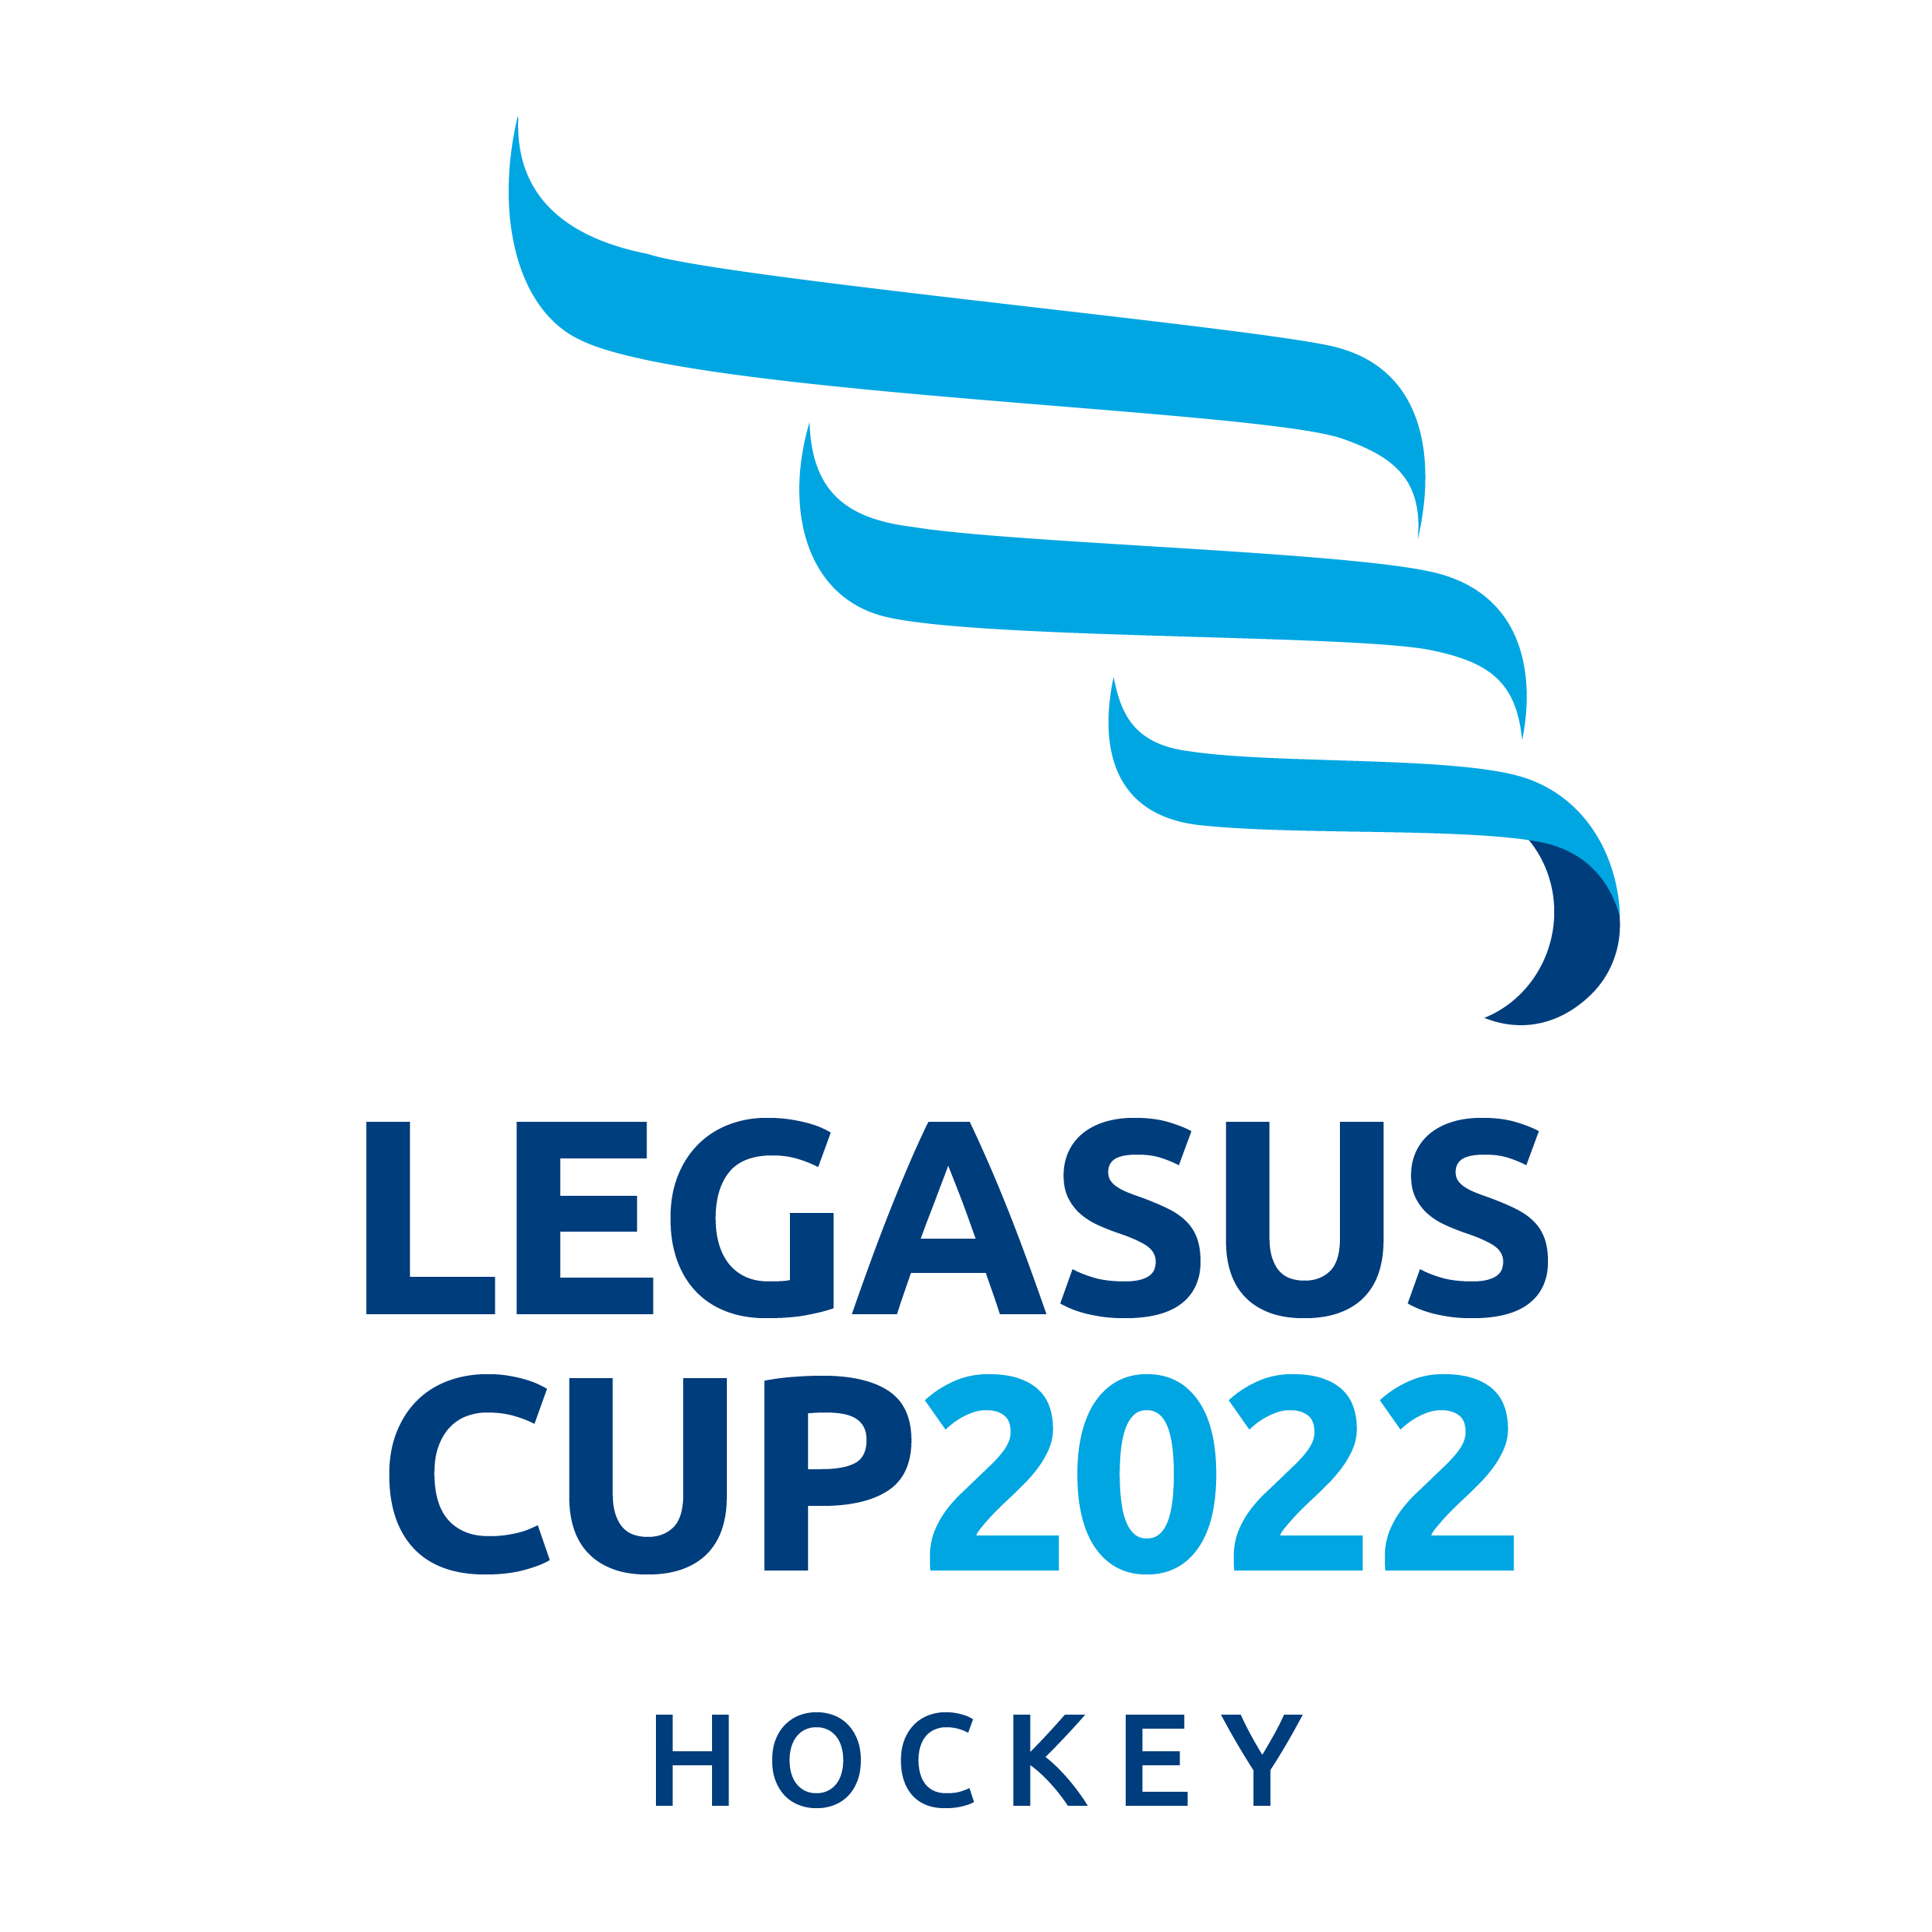 Legasus Cup Logo 2022